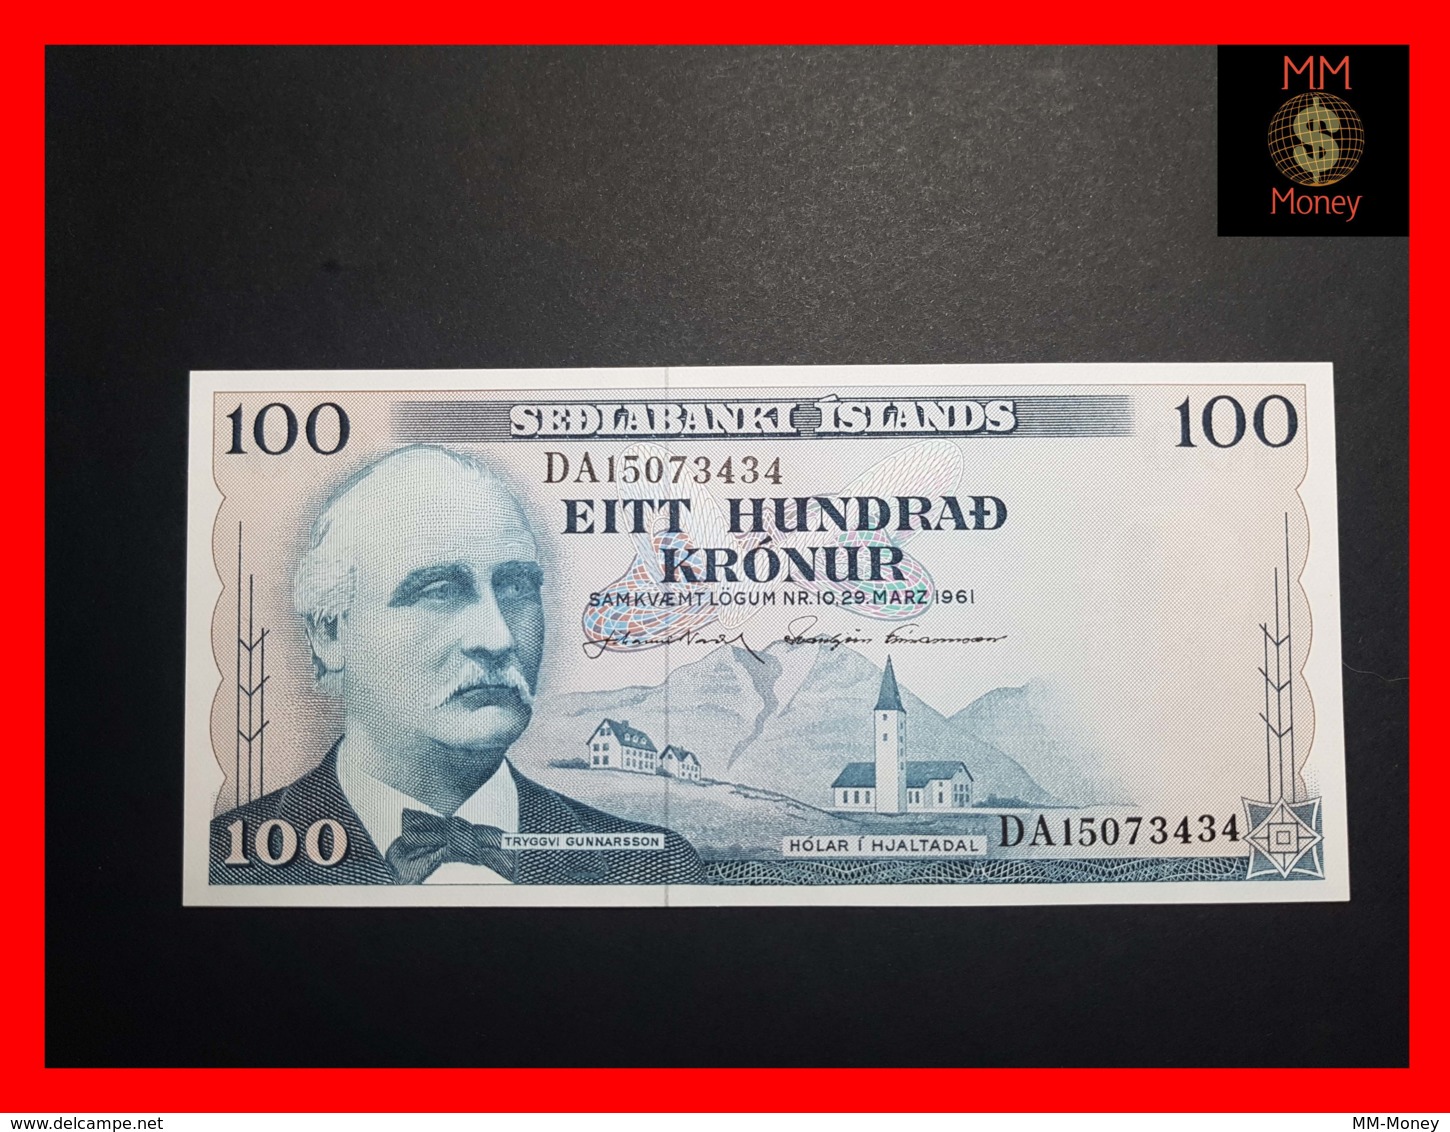 ICELAND 100 Kronur  L. 29.03.1961  P. 44  Issued 1965  UNC  [MM-Money] - IJsland